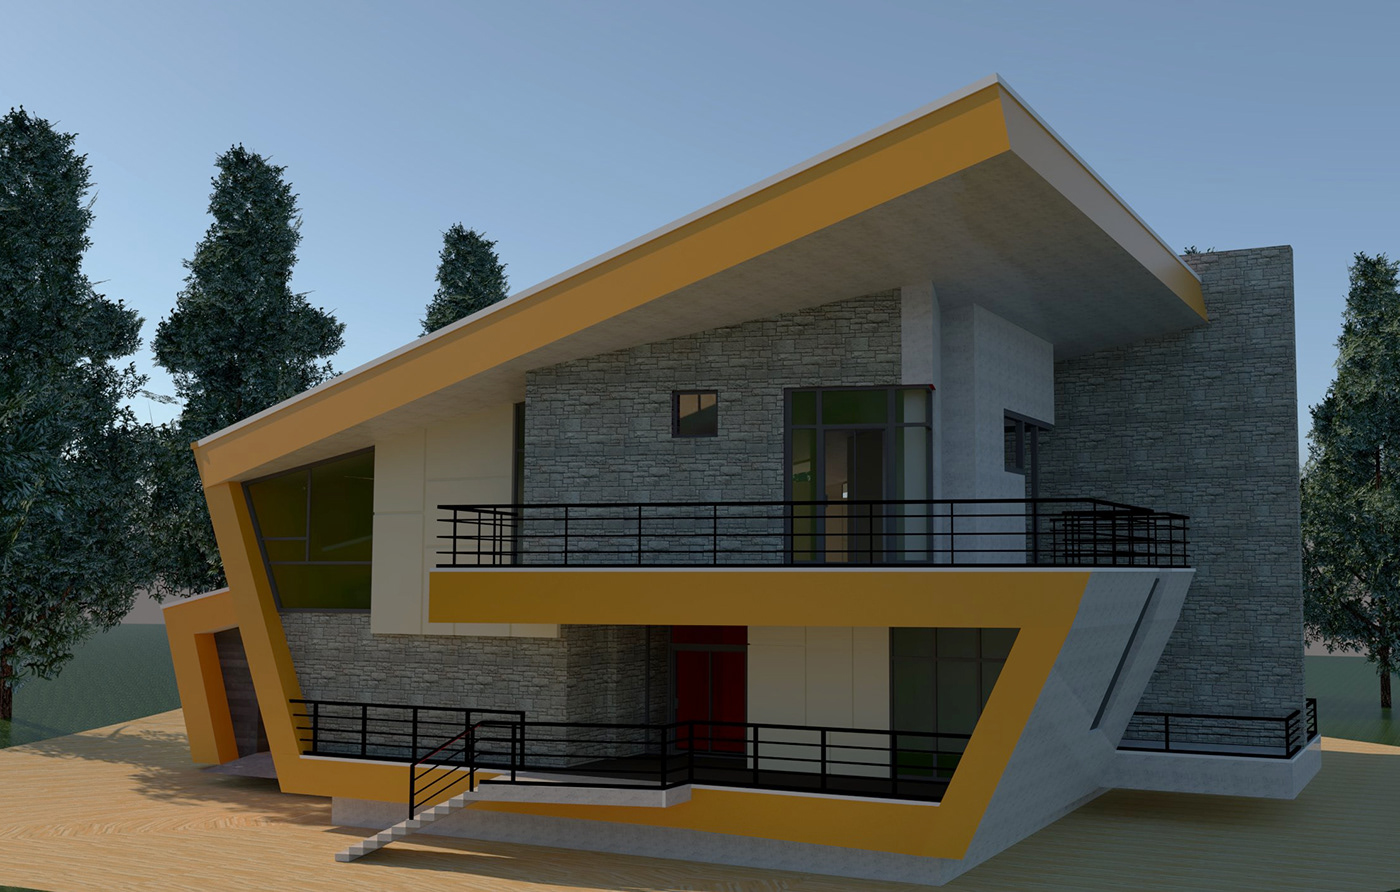 architecture Render 3D vray exterior SketchUP design